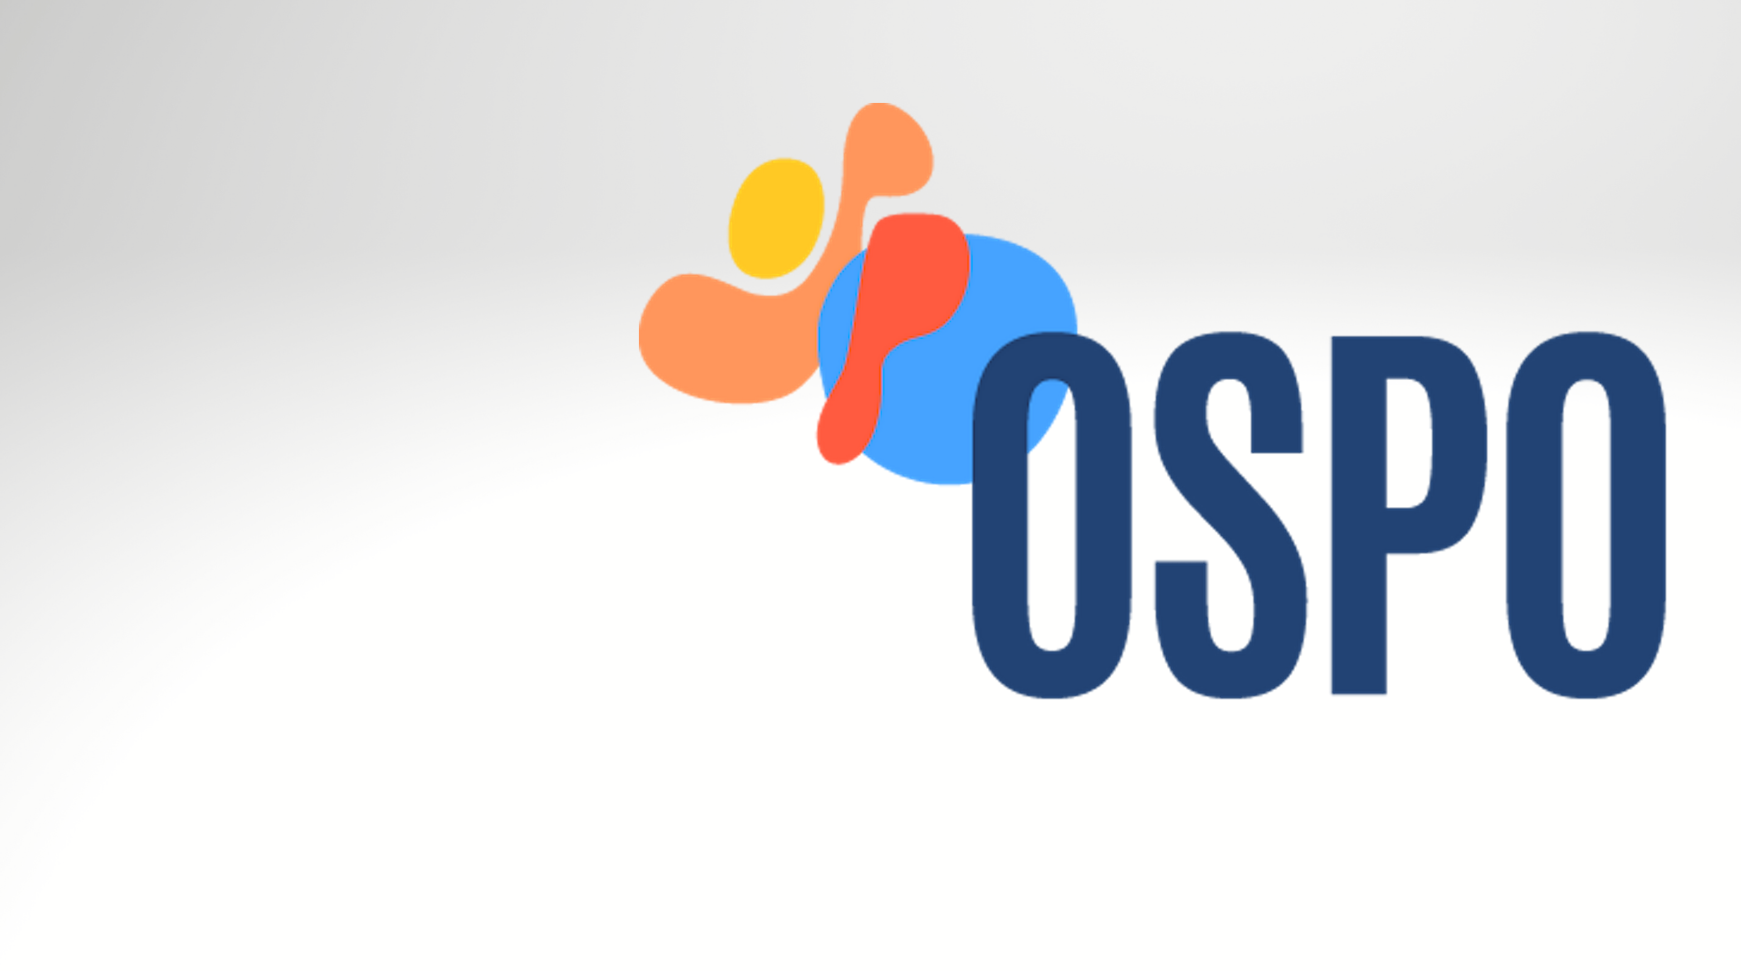 Multi colored logo for OSPO